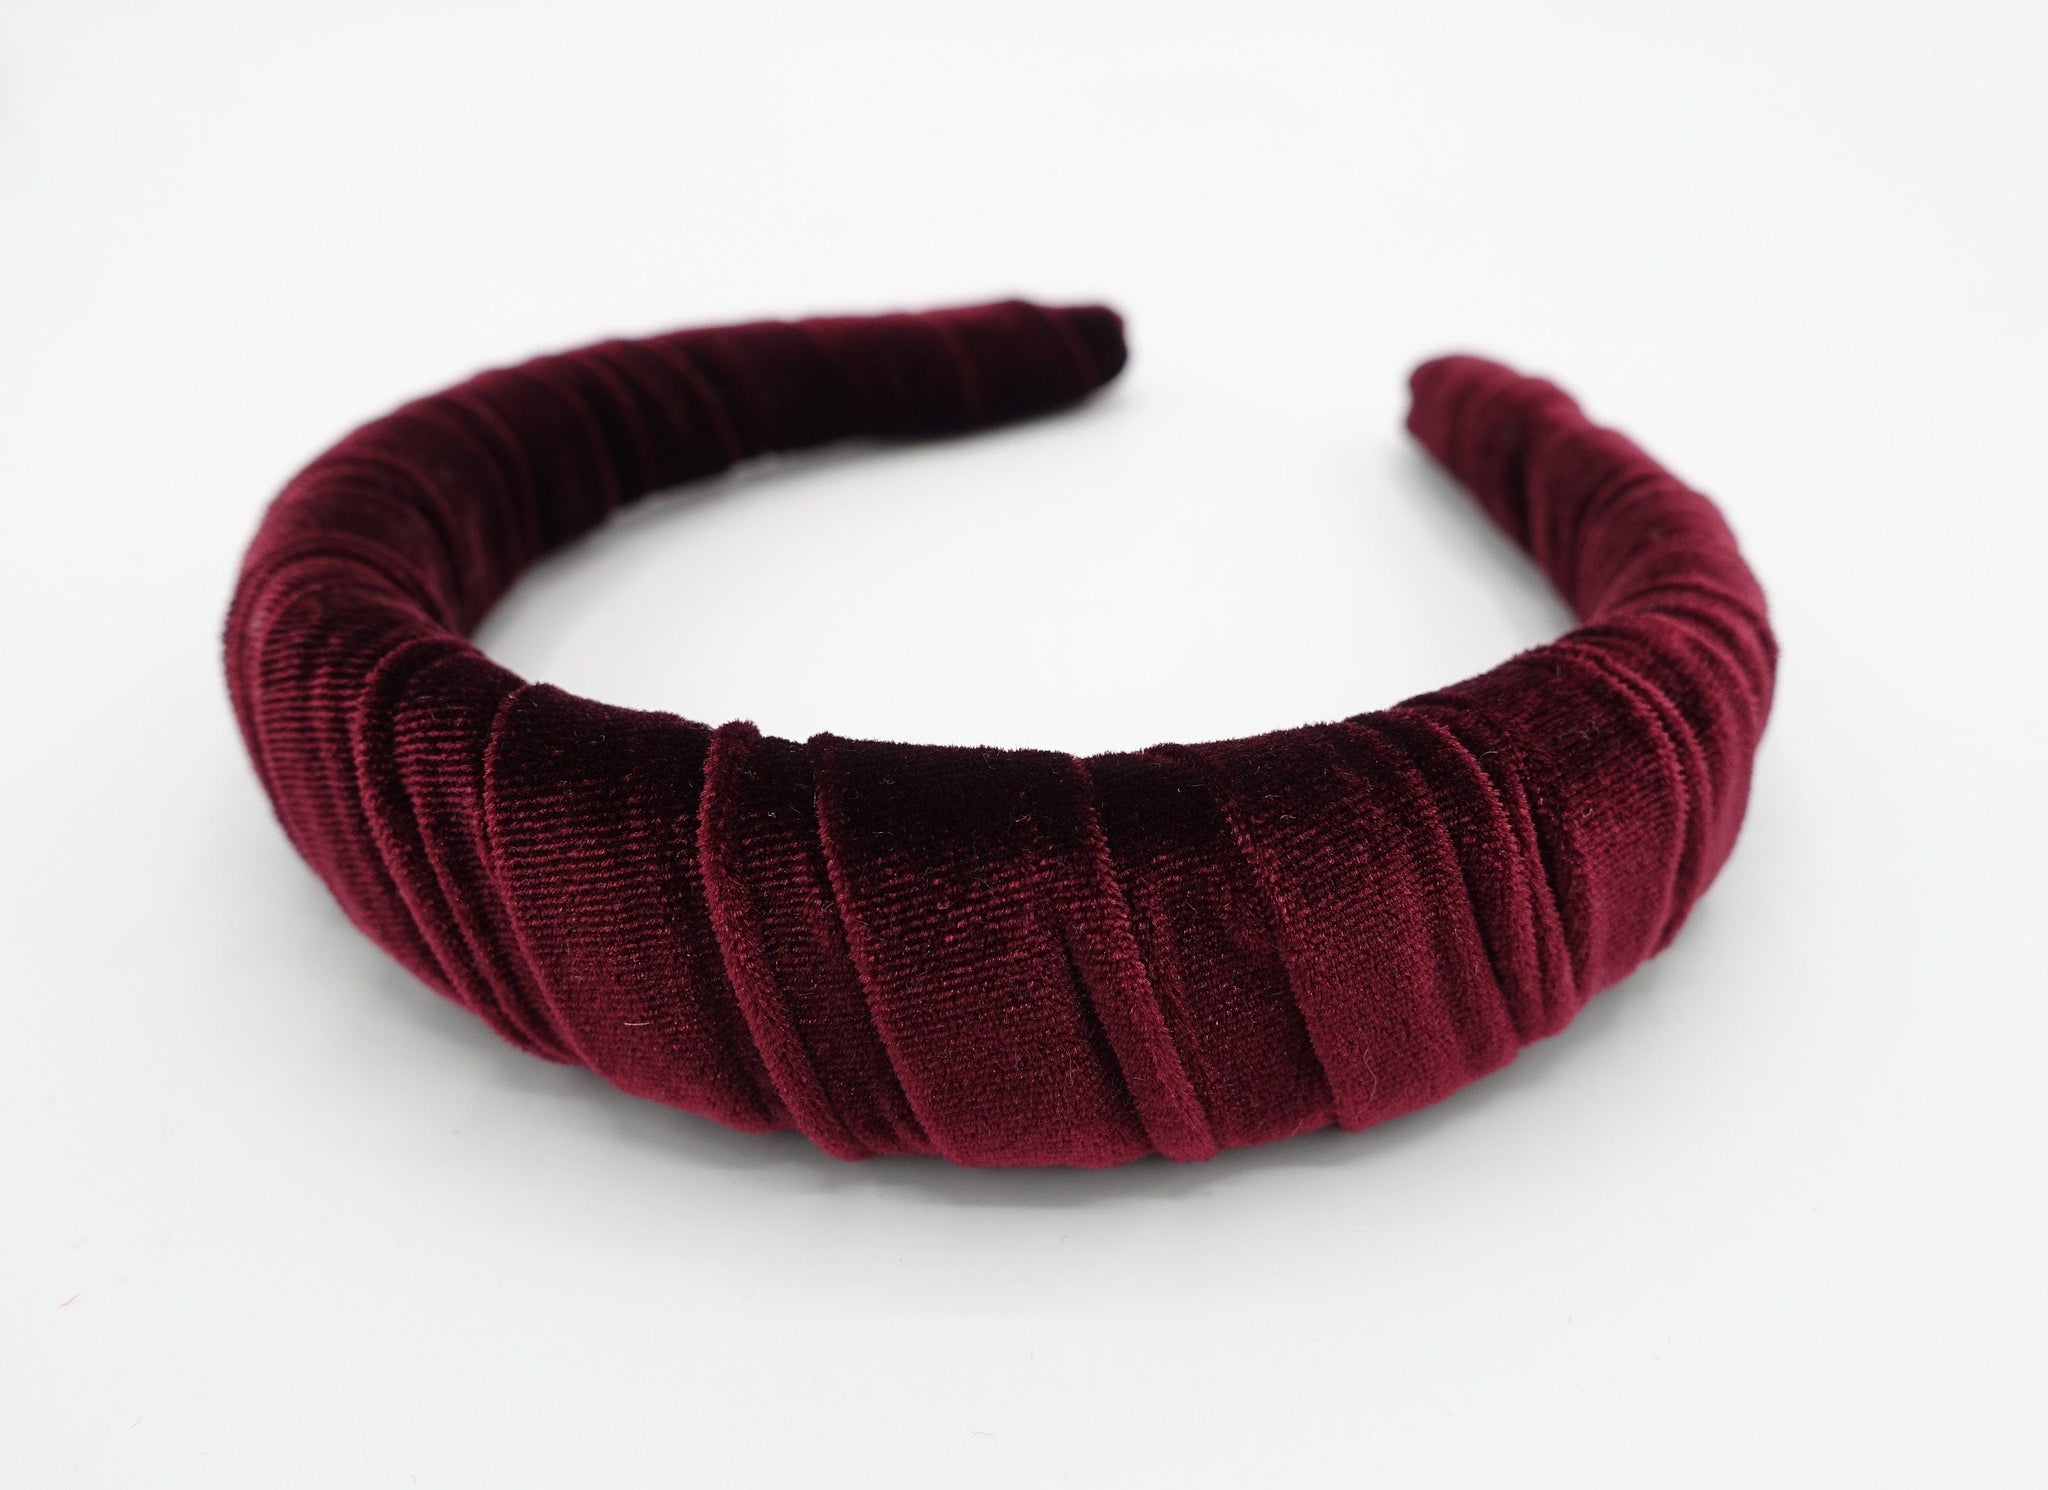 veryshine.com Headband Red wine velvet wrap padded headband fashion hair accessory for women